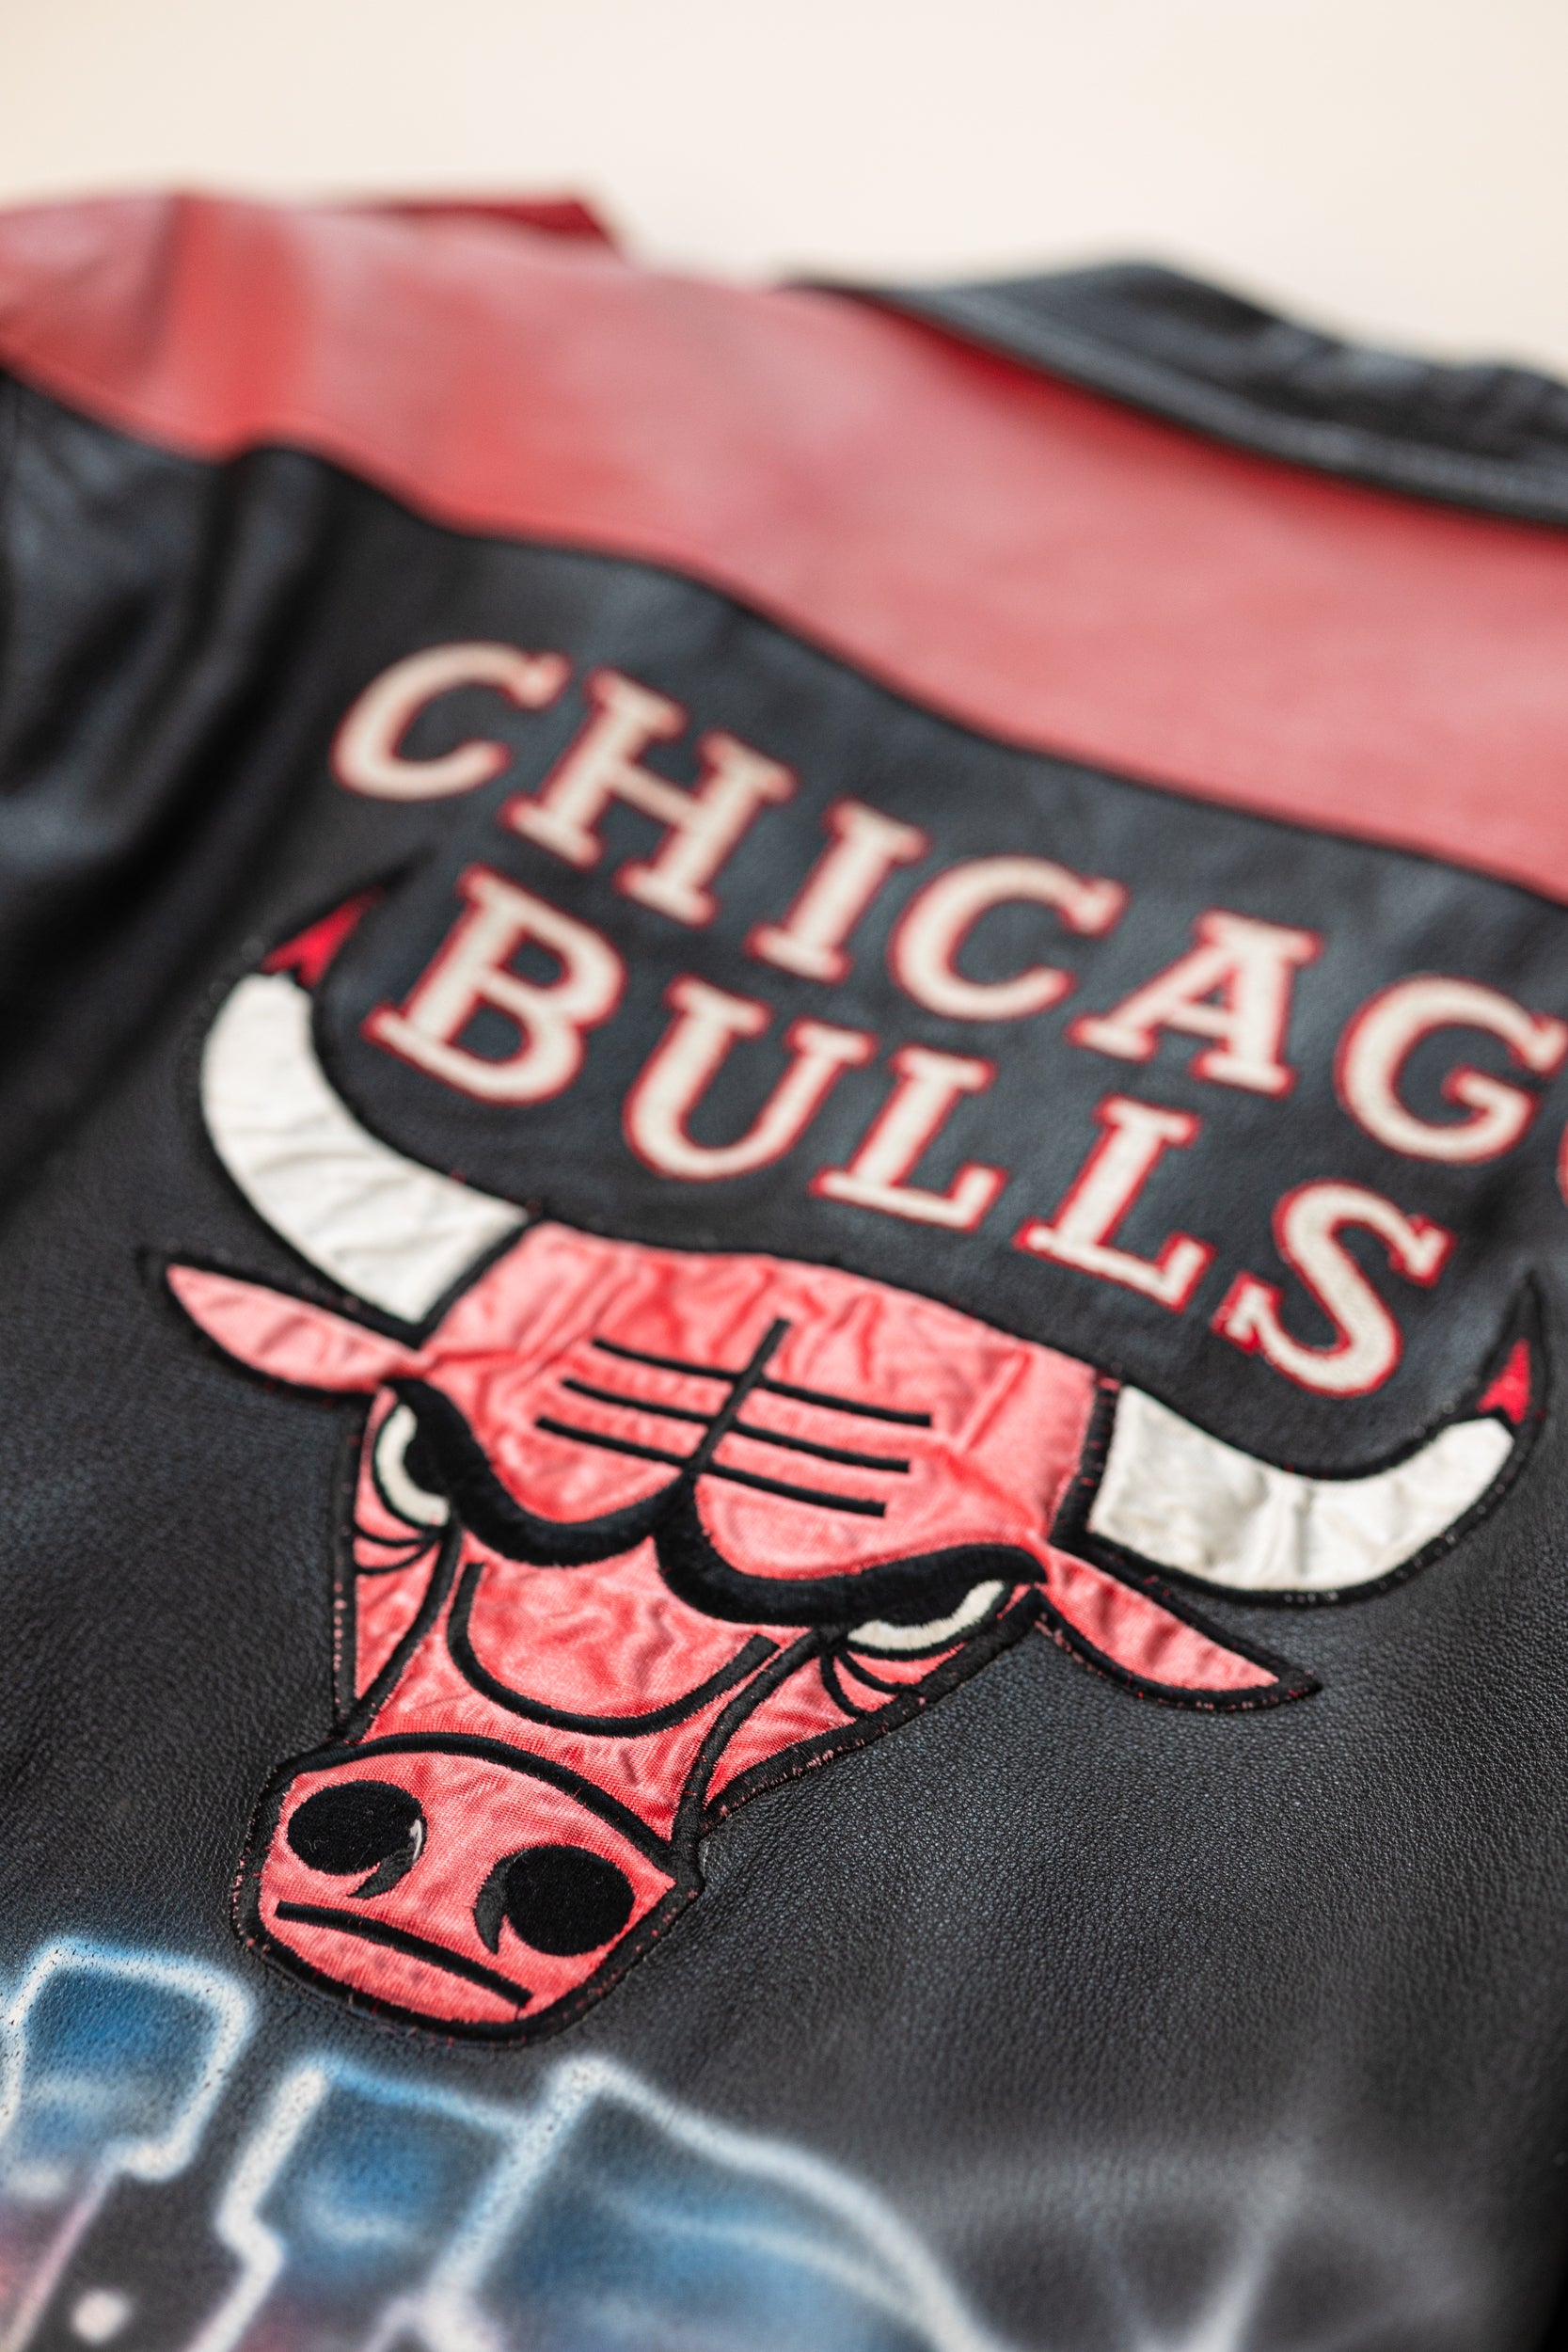 chicago bulls jacket mens